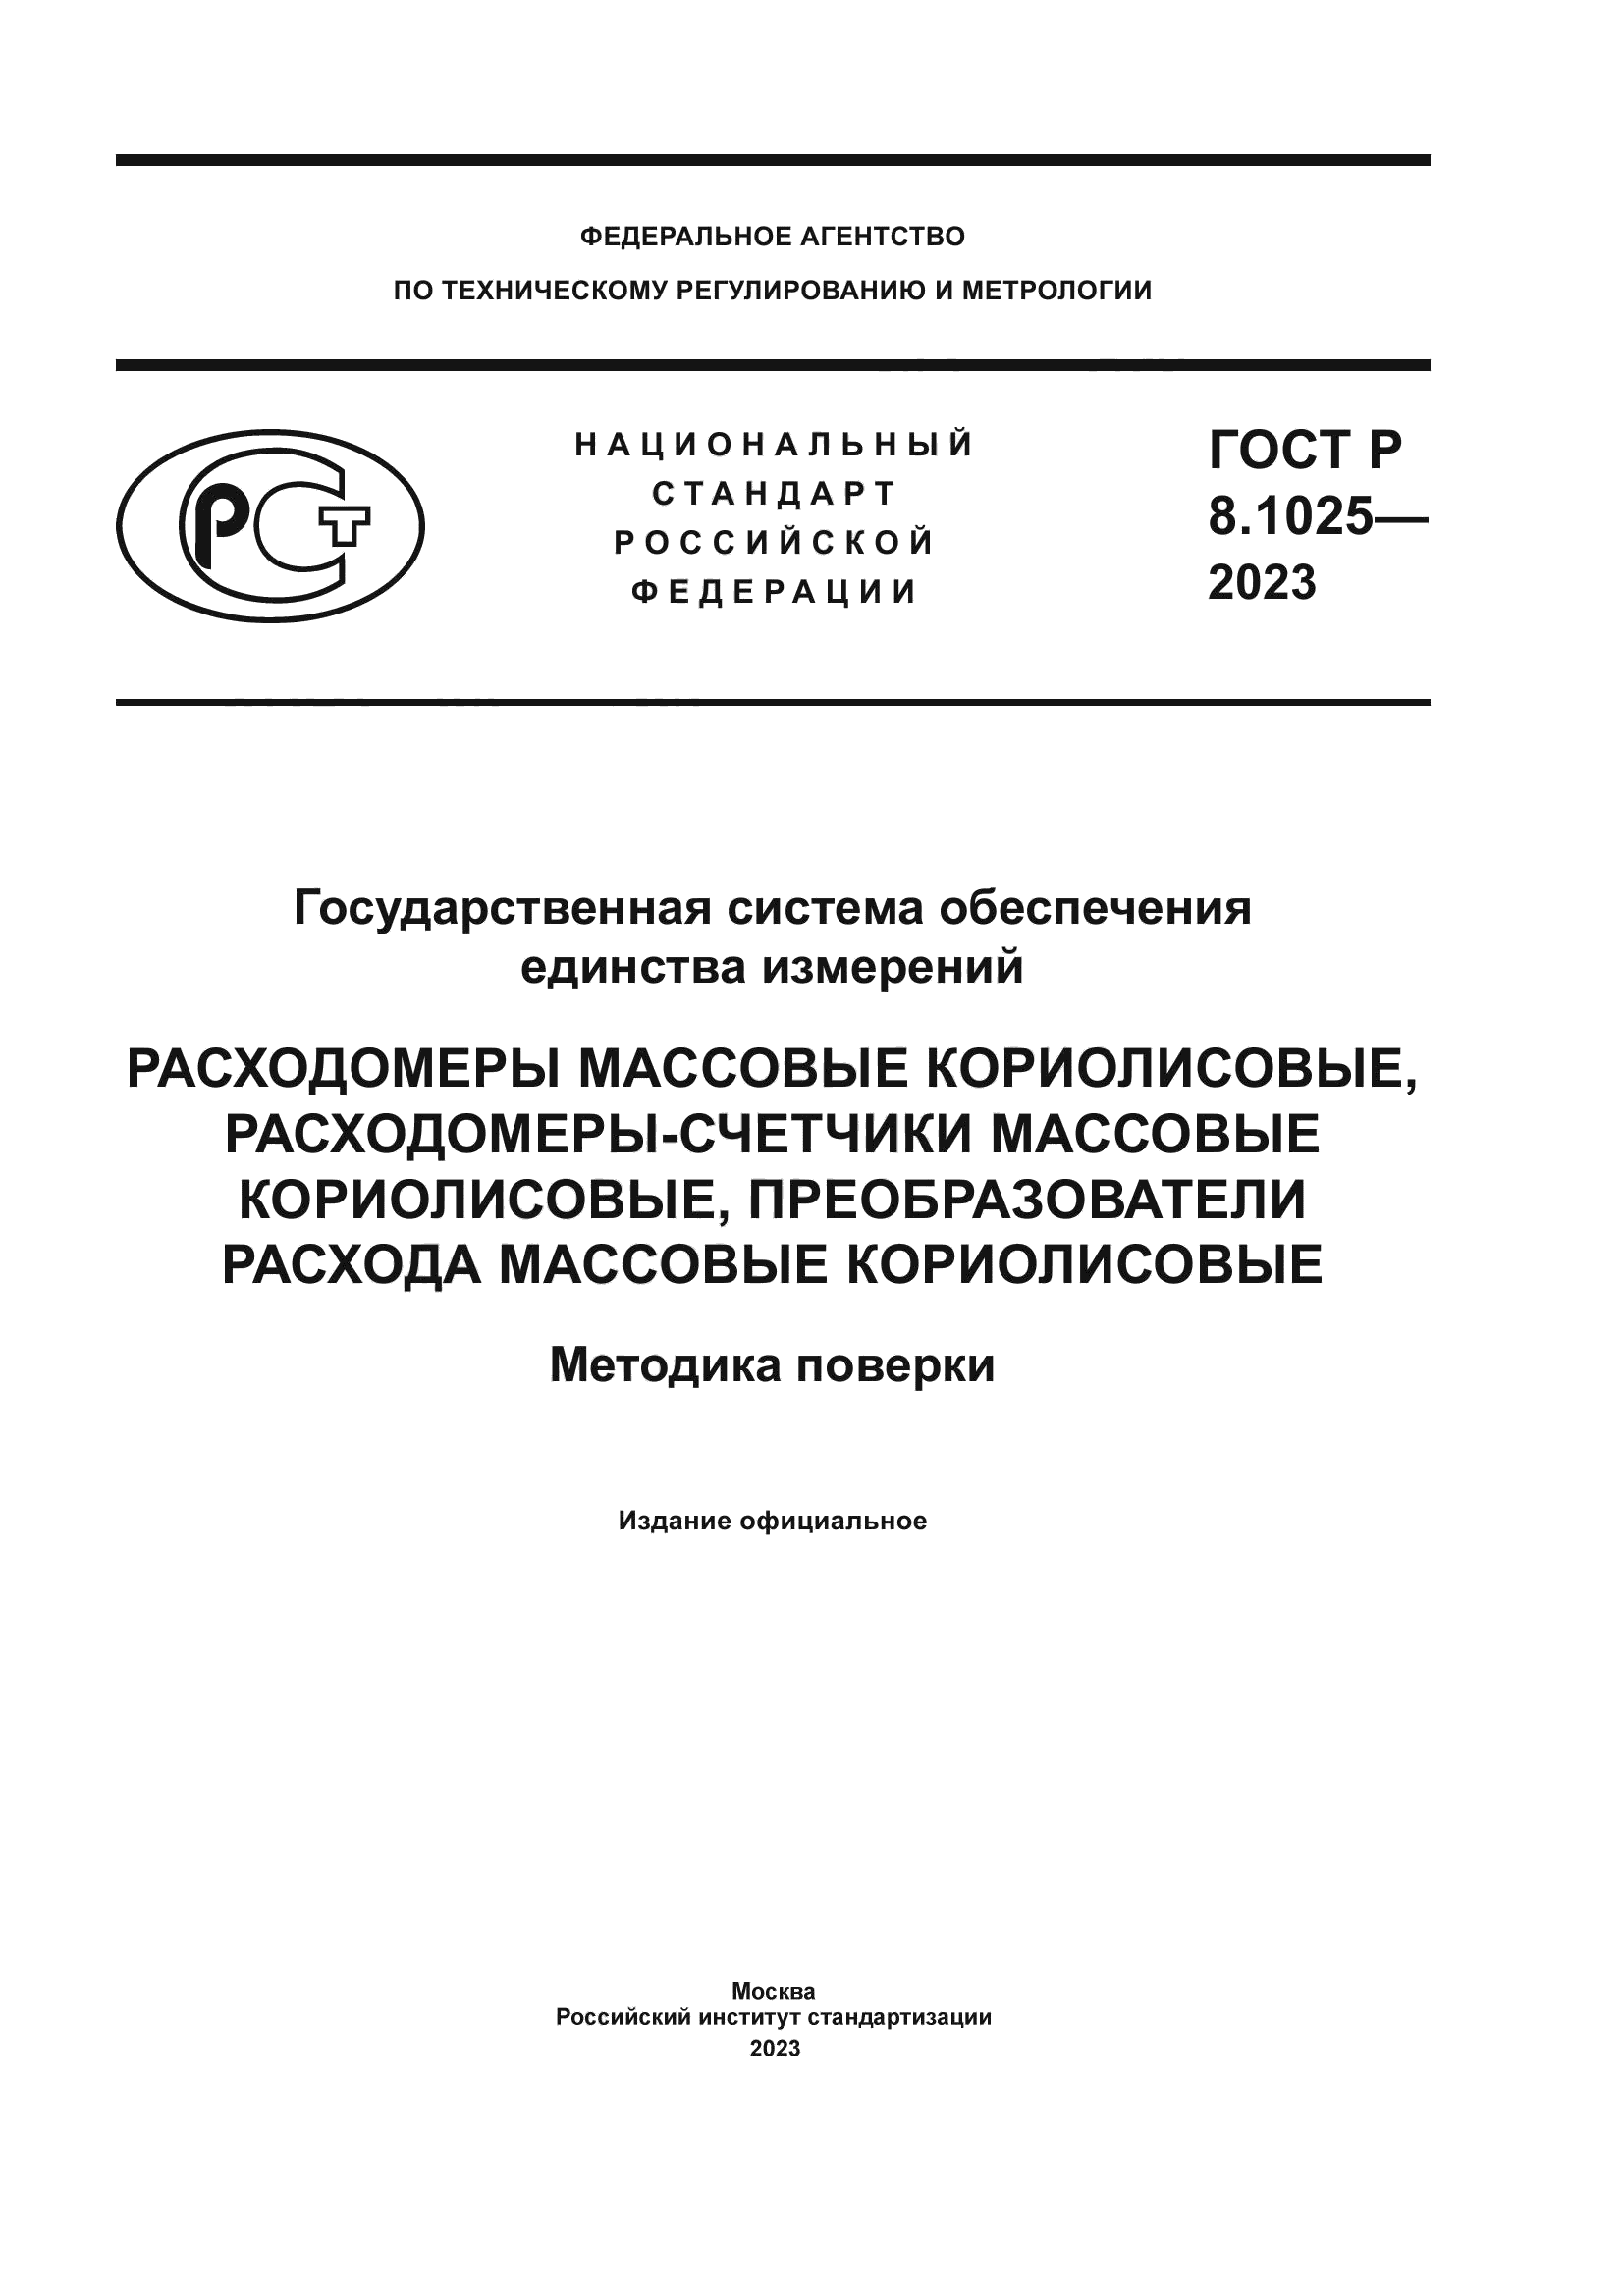 ГОСТ Р 8.1025-2023